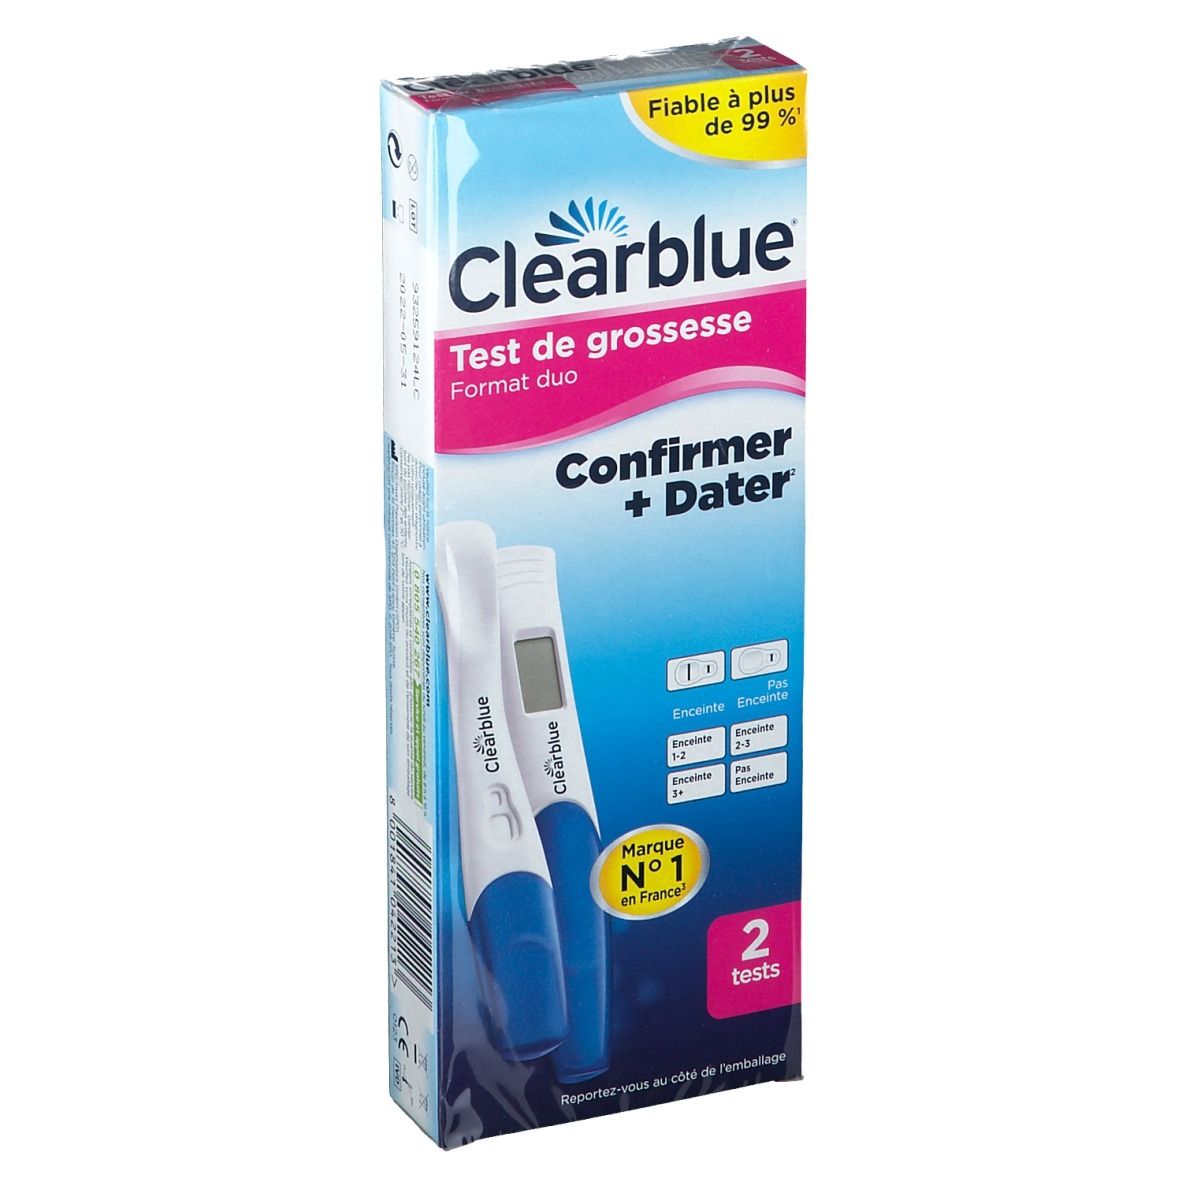 Clearblue™ Confirmer + Dater 2 Test de grossesse format duo